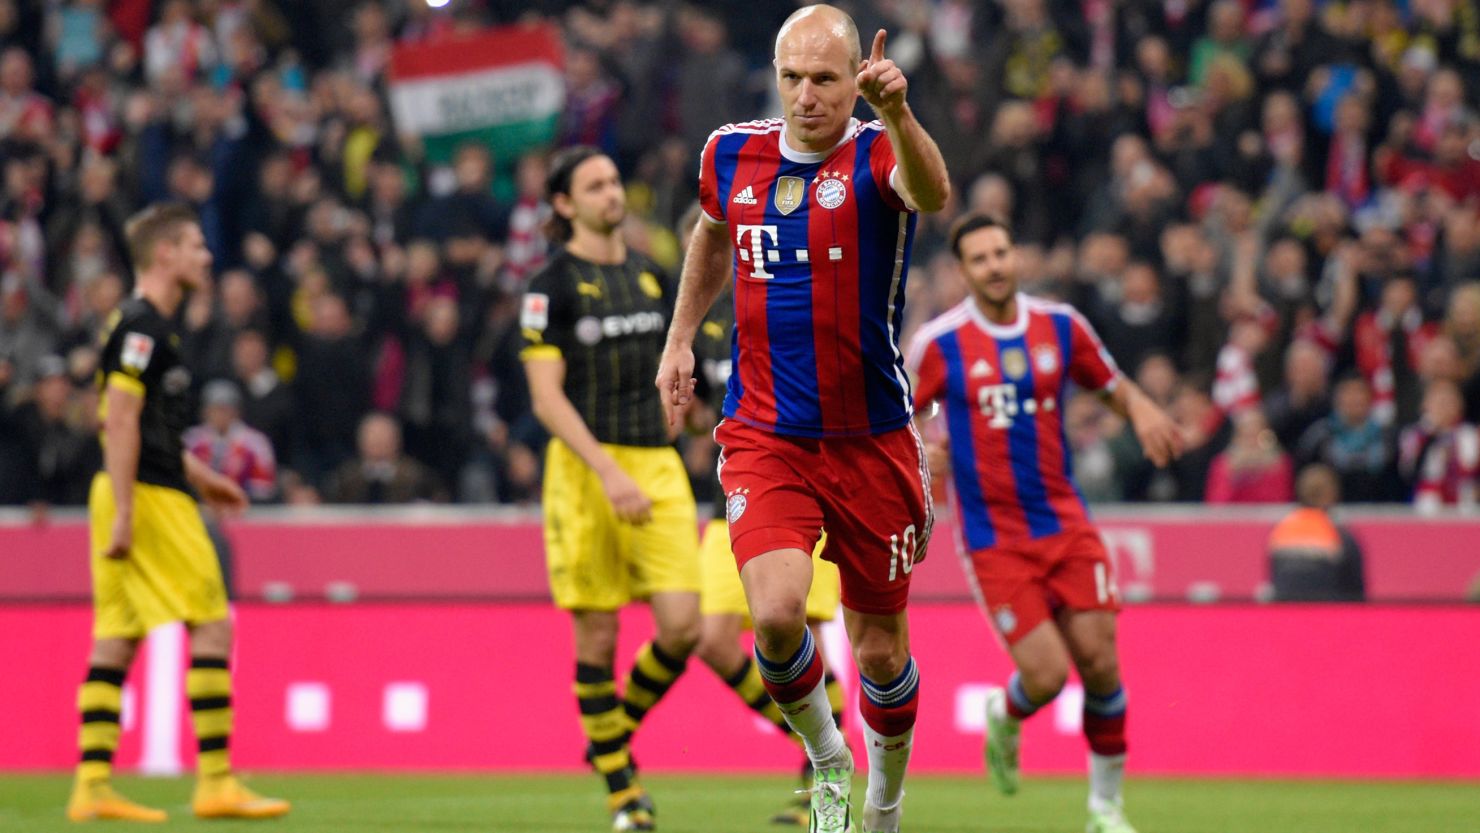 Arjen Robben celebrates scoring the decisive goal against Borussia Dortmund at the Allianz Arena in Munich.